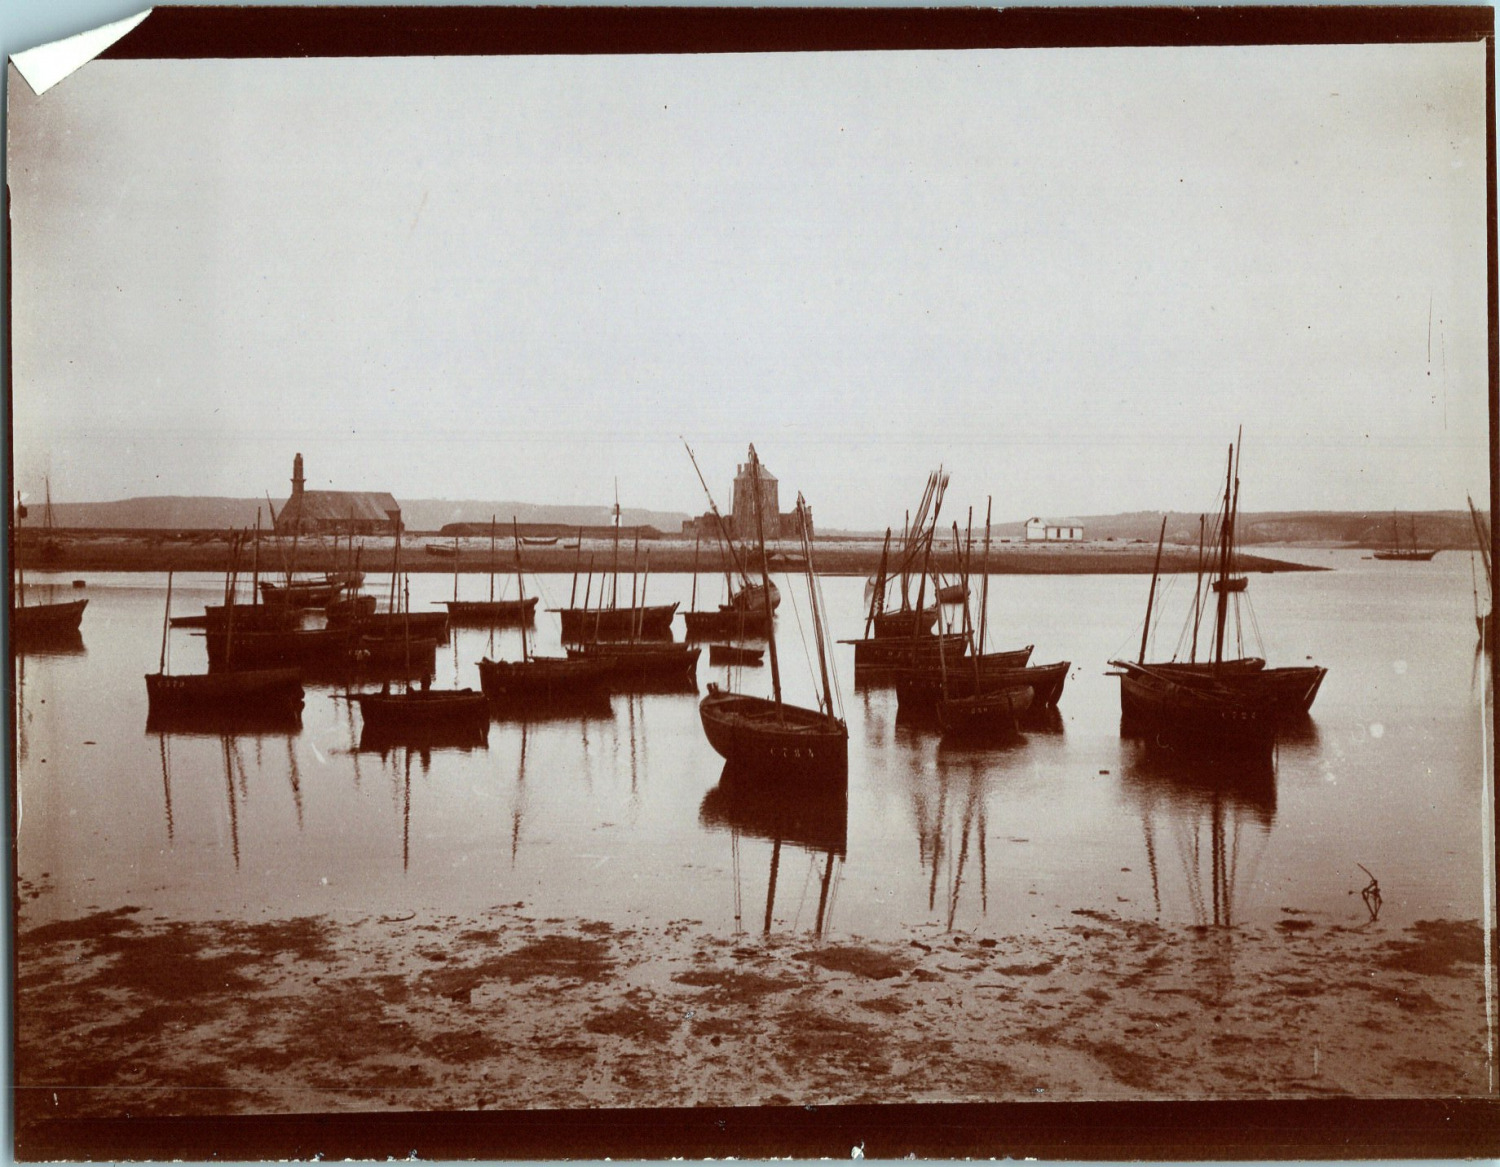 France, Camaret-sur-Mer, boat view, vintage print, circa 1905 vintage print print